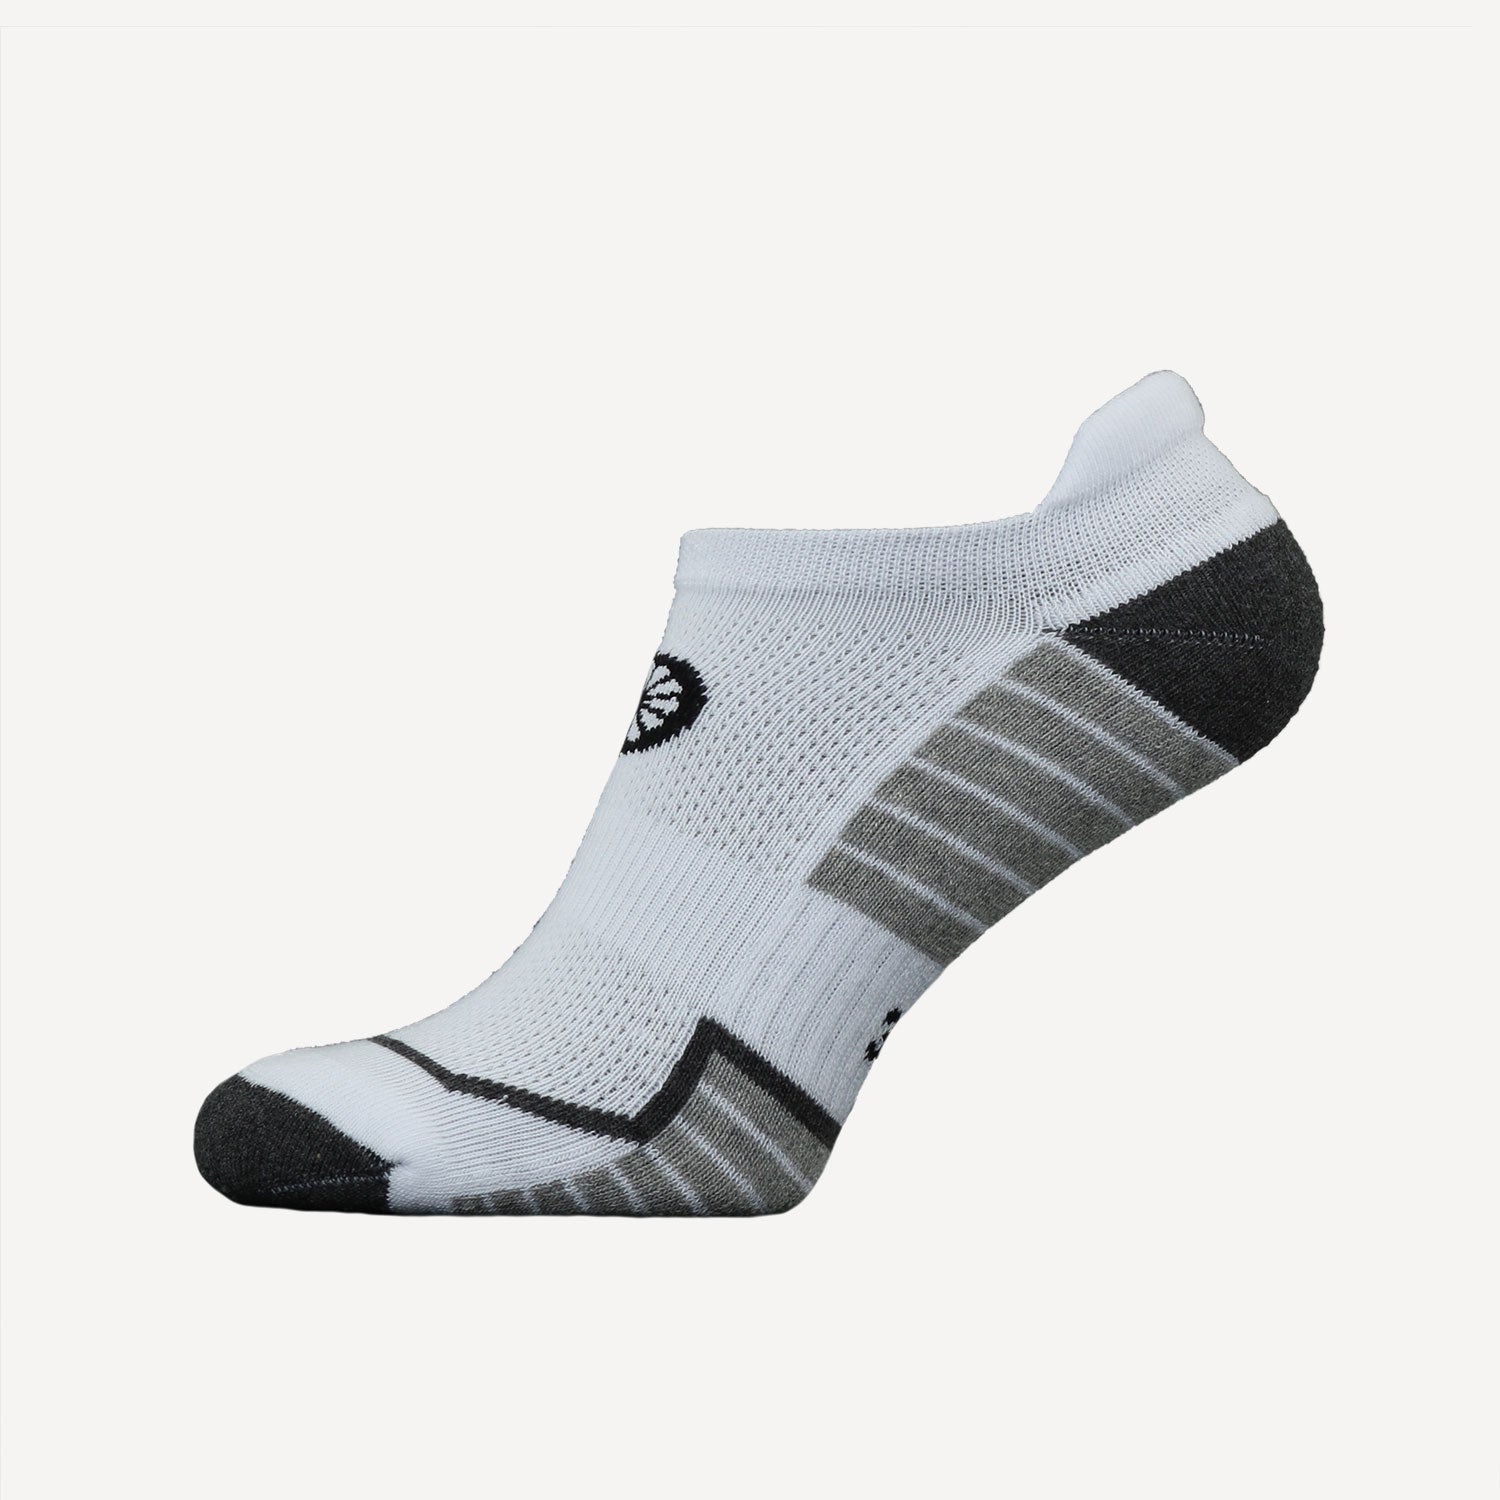 The Indian Maharadja Kadiri Low Tennis Socks - De Delftse Hout - White (1)